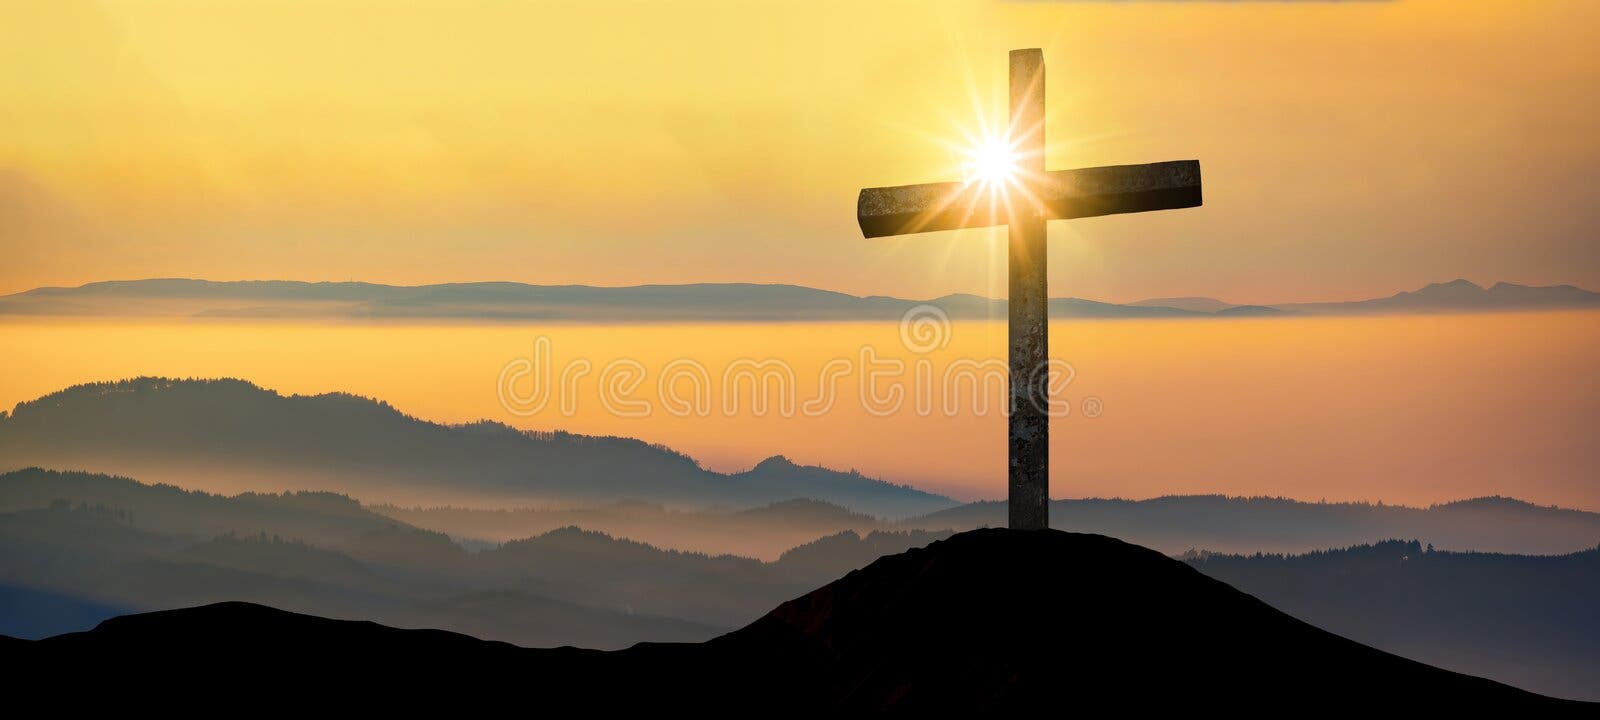 Crucifixion Jesus Christ - Cross at Sunset Stock Image - Image of ...